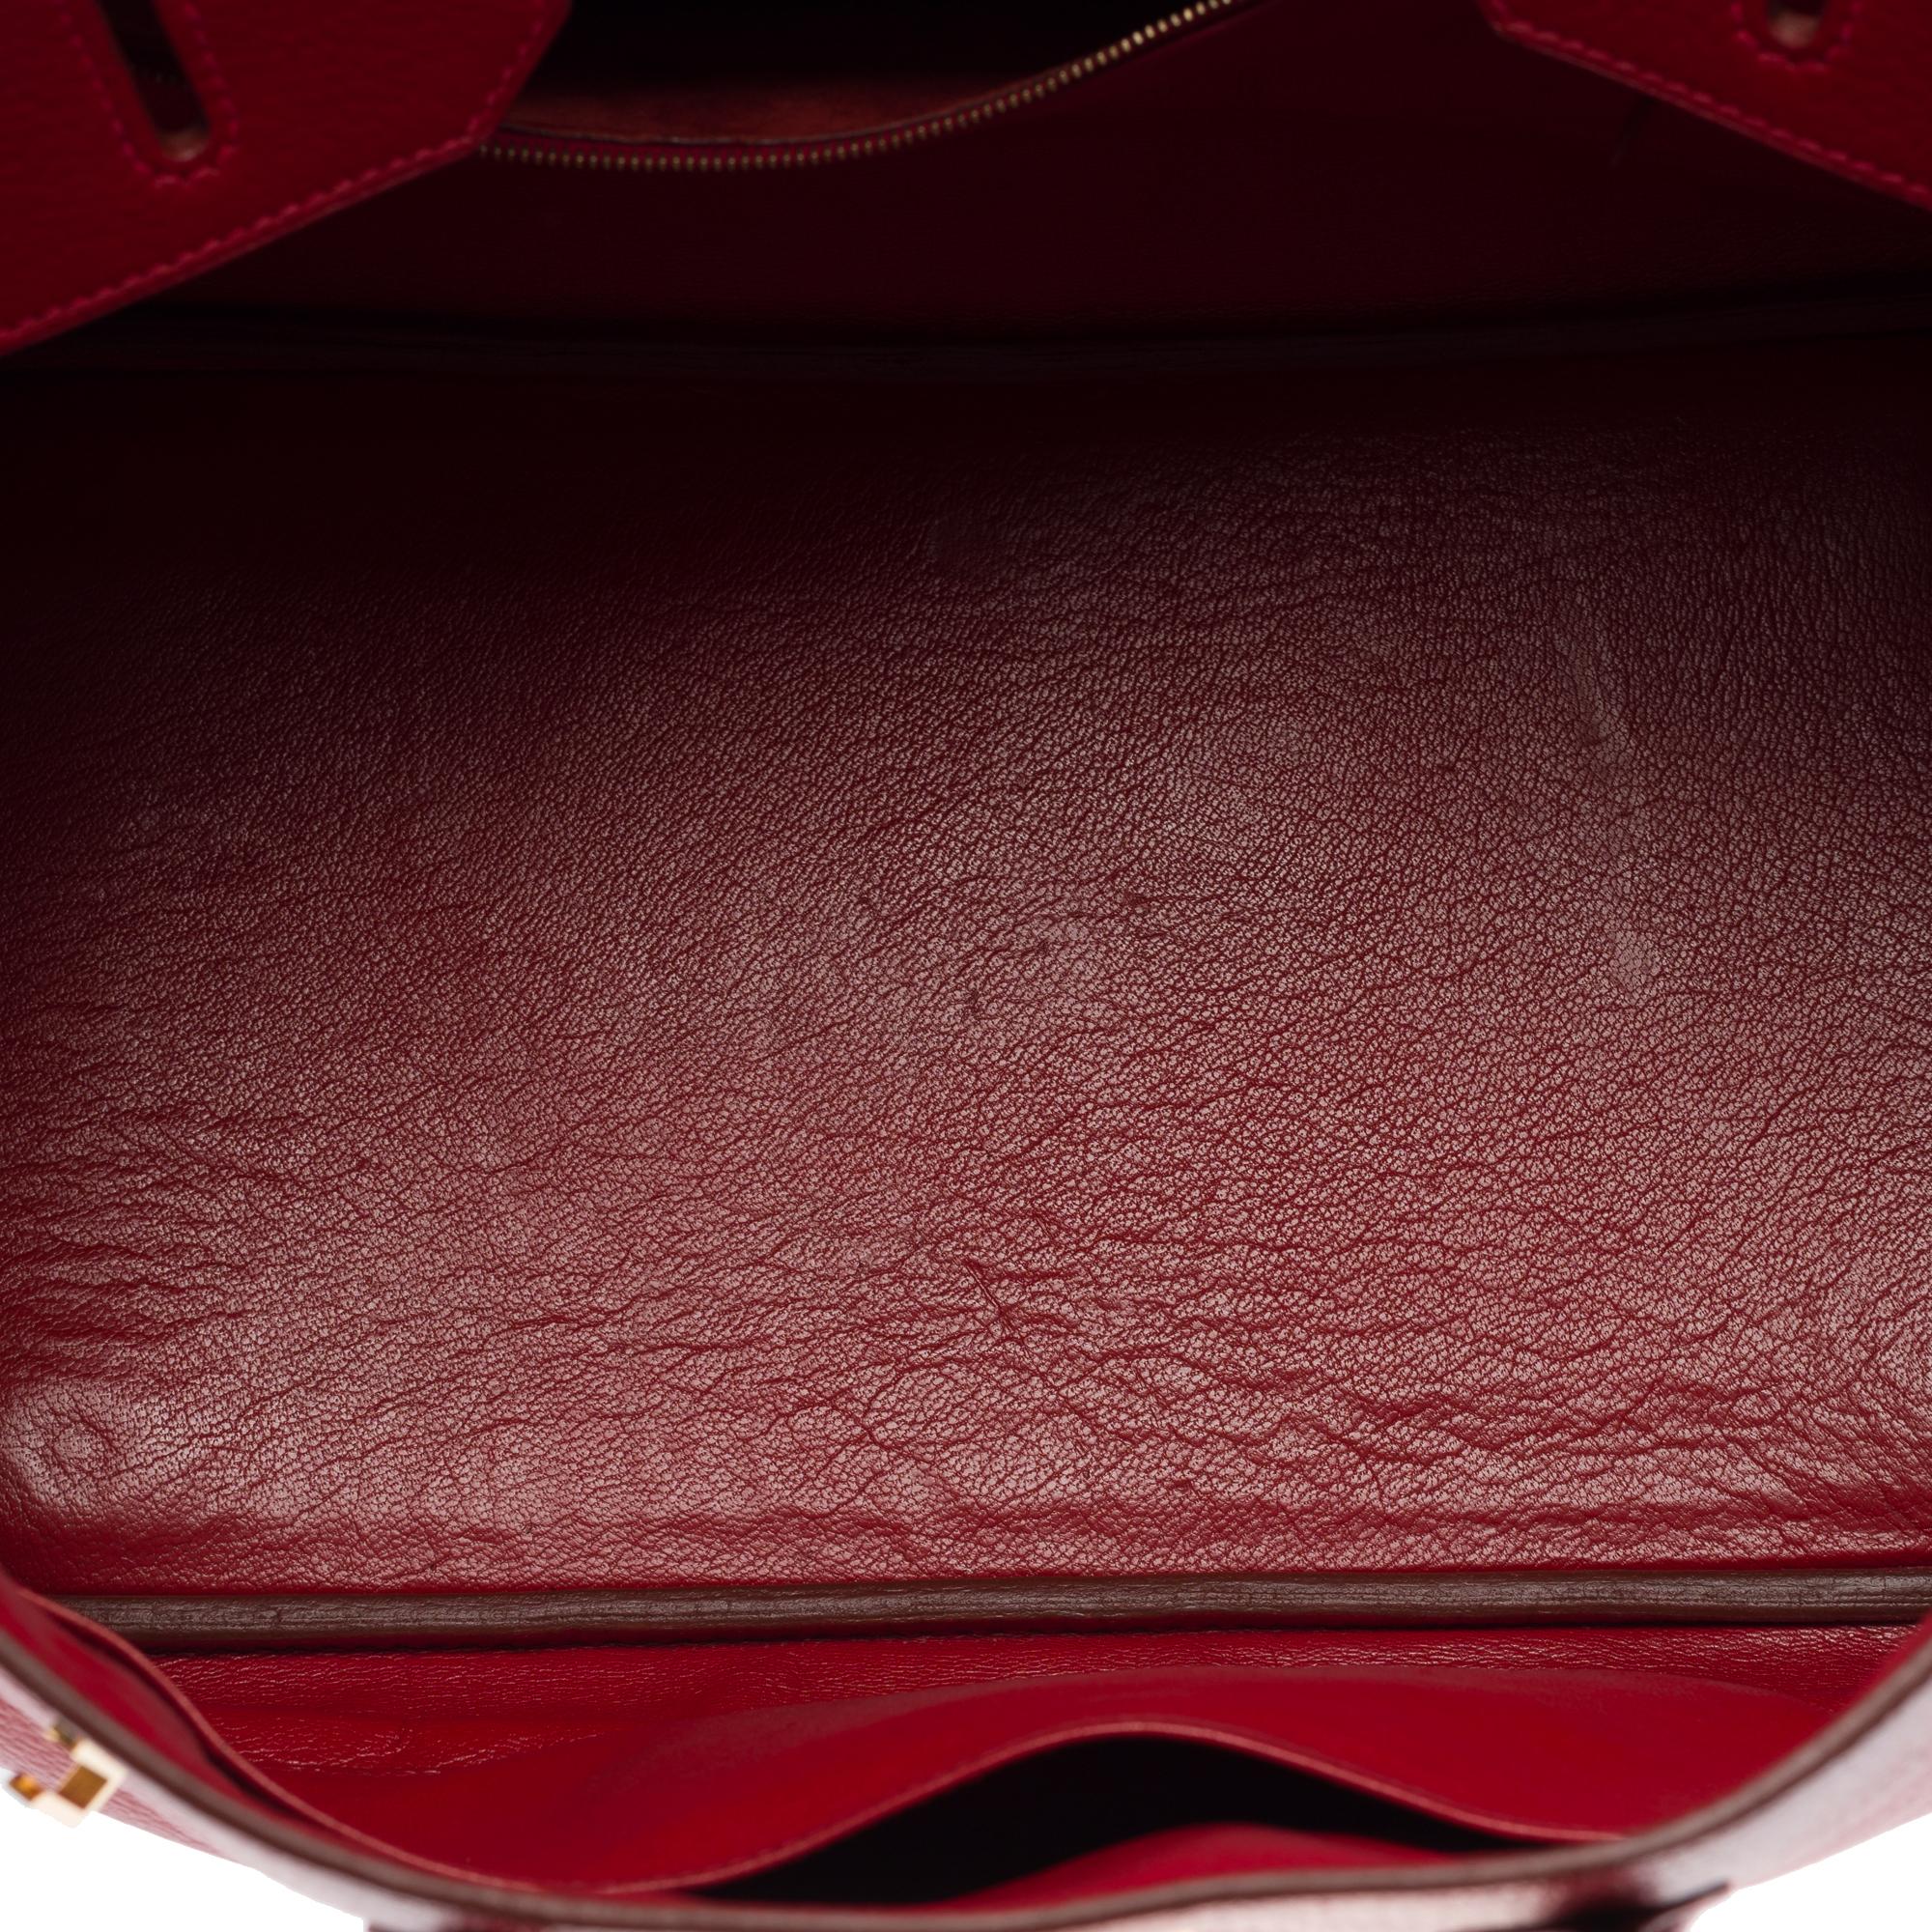 Stunning Hermès Birkin 35 handbag in Rouge Garance Togo leather, GHW For Sale 3